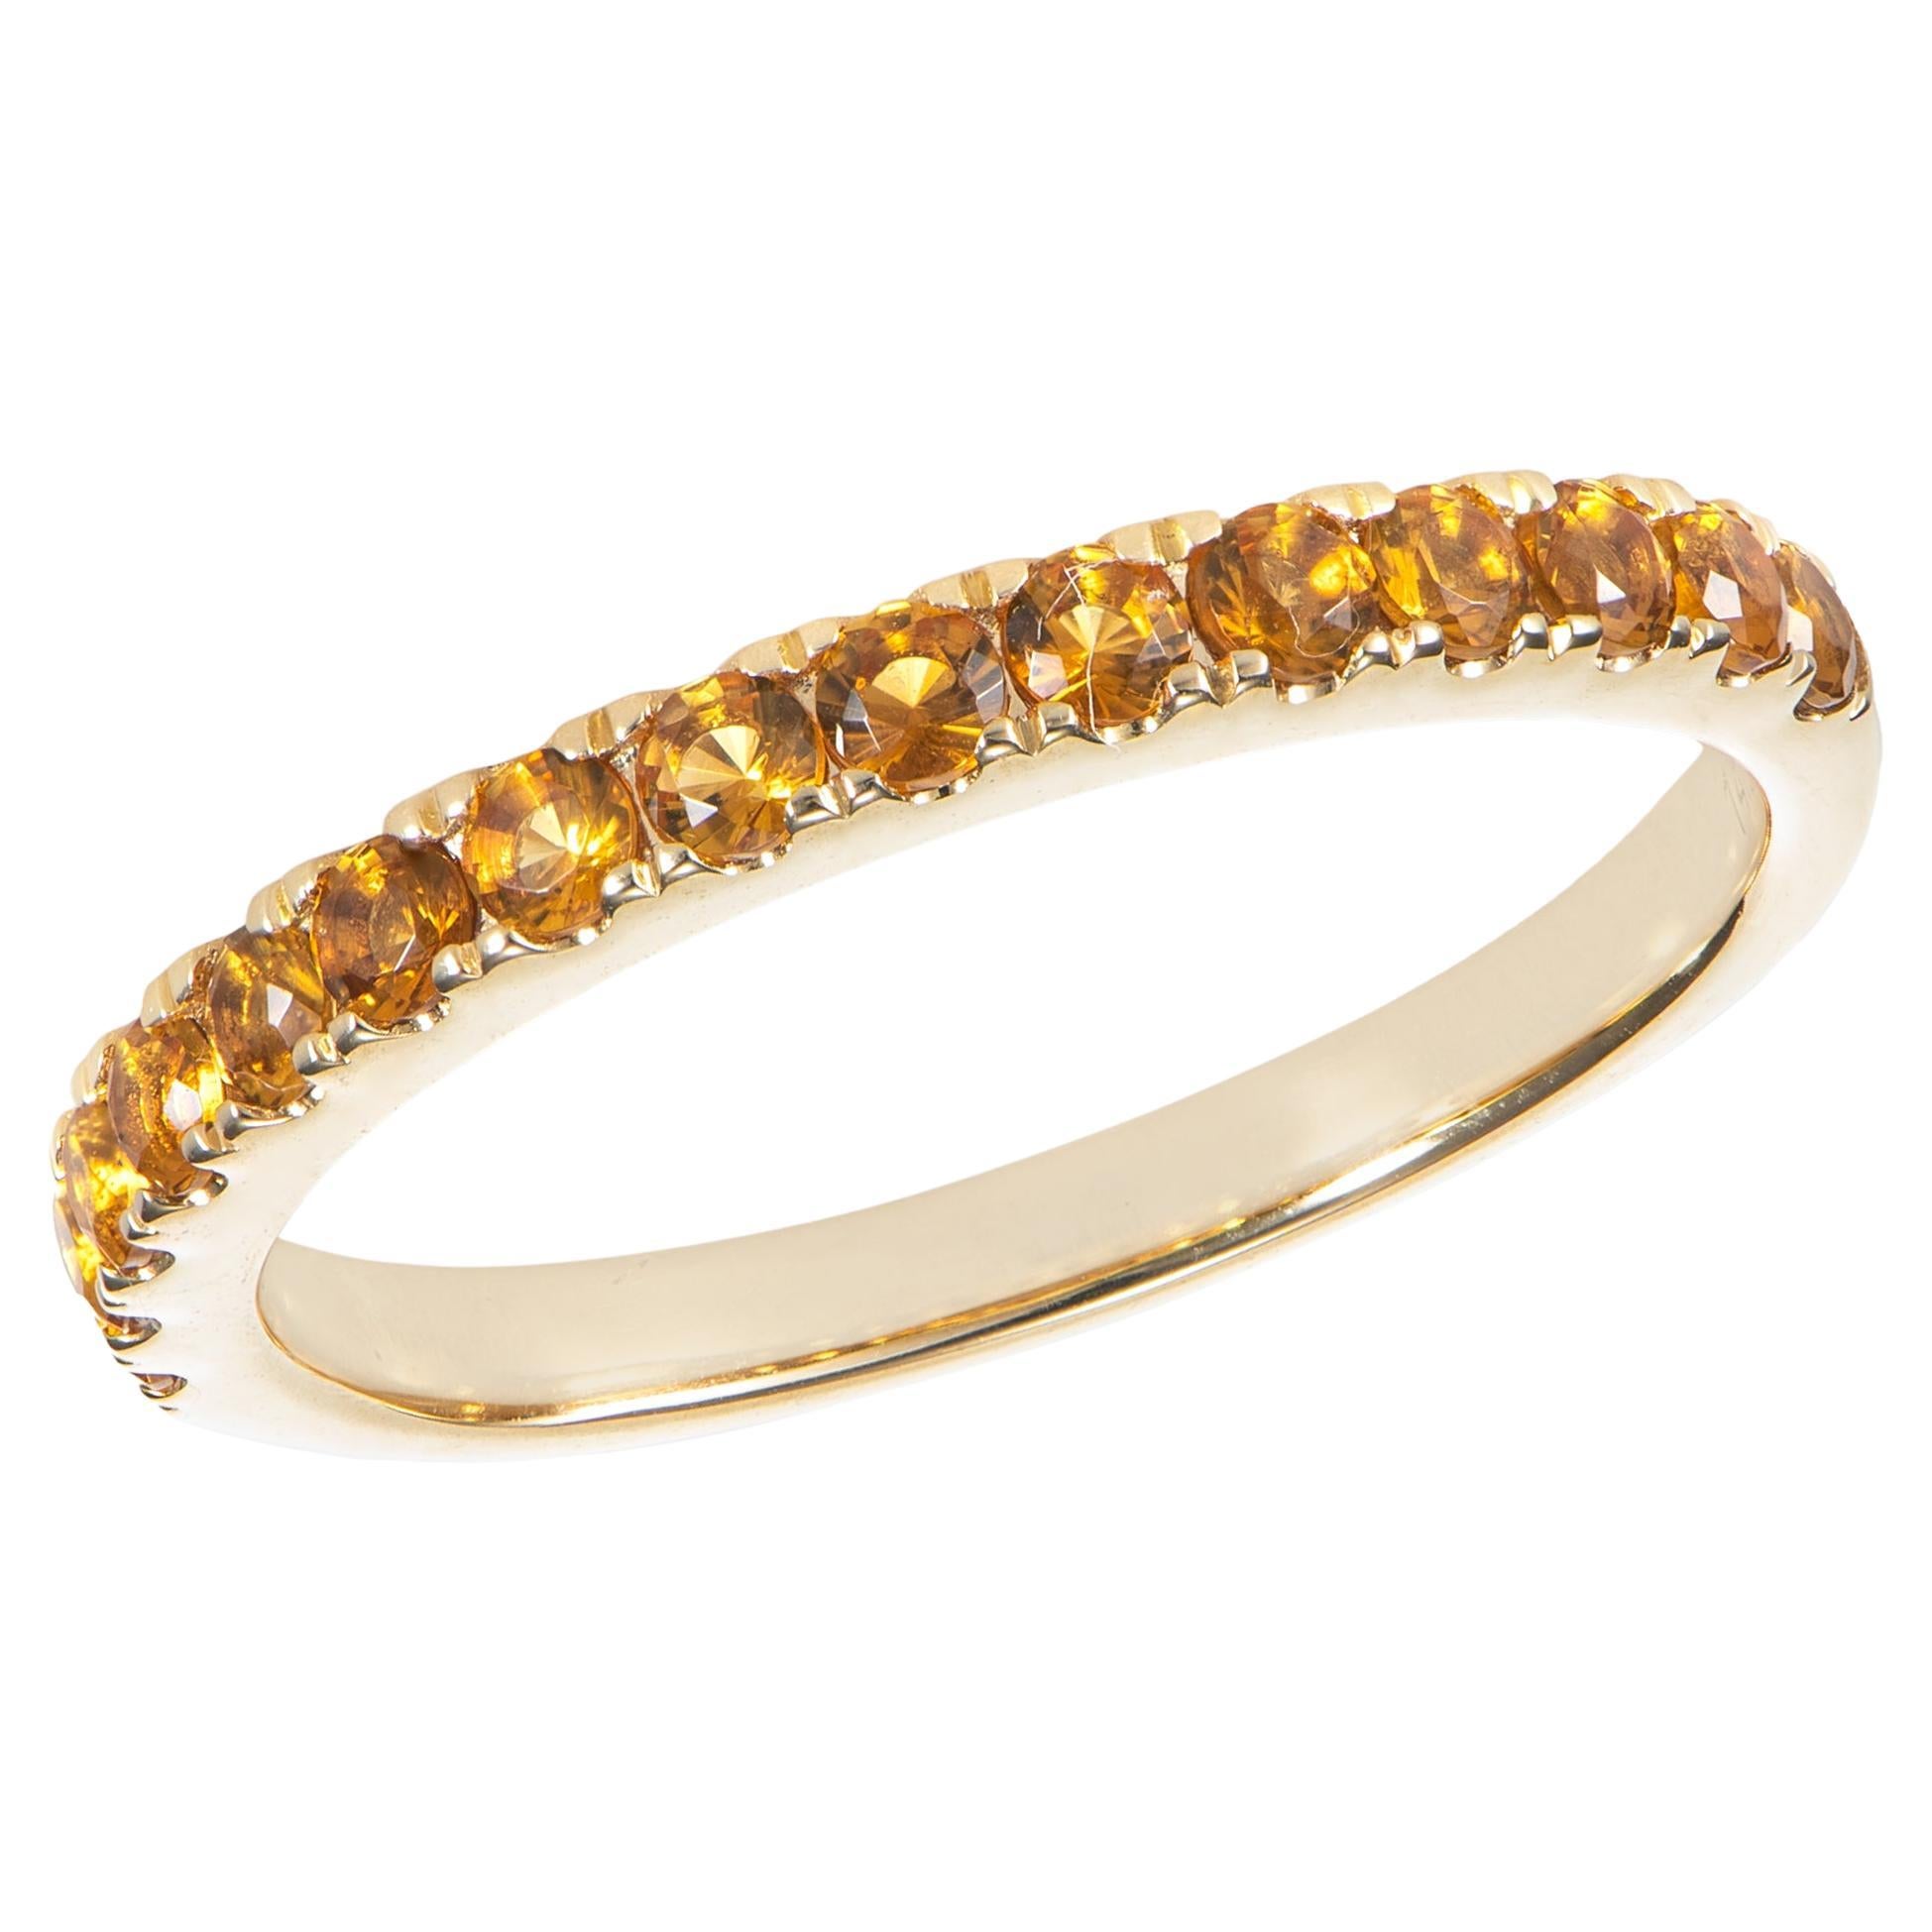 0.455 Carat Citrine Eternity Ring in 14Karat Yellow Gold. For Sale